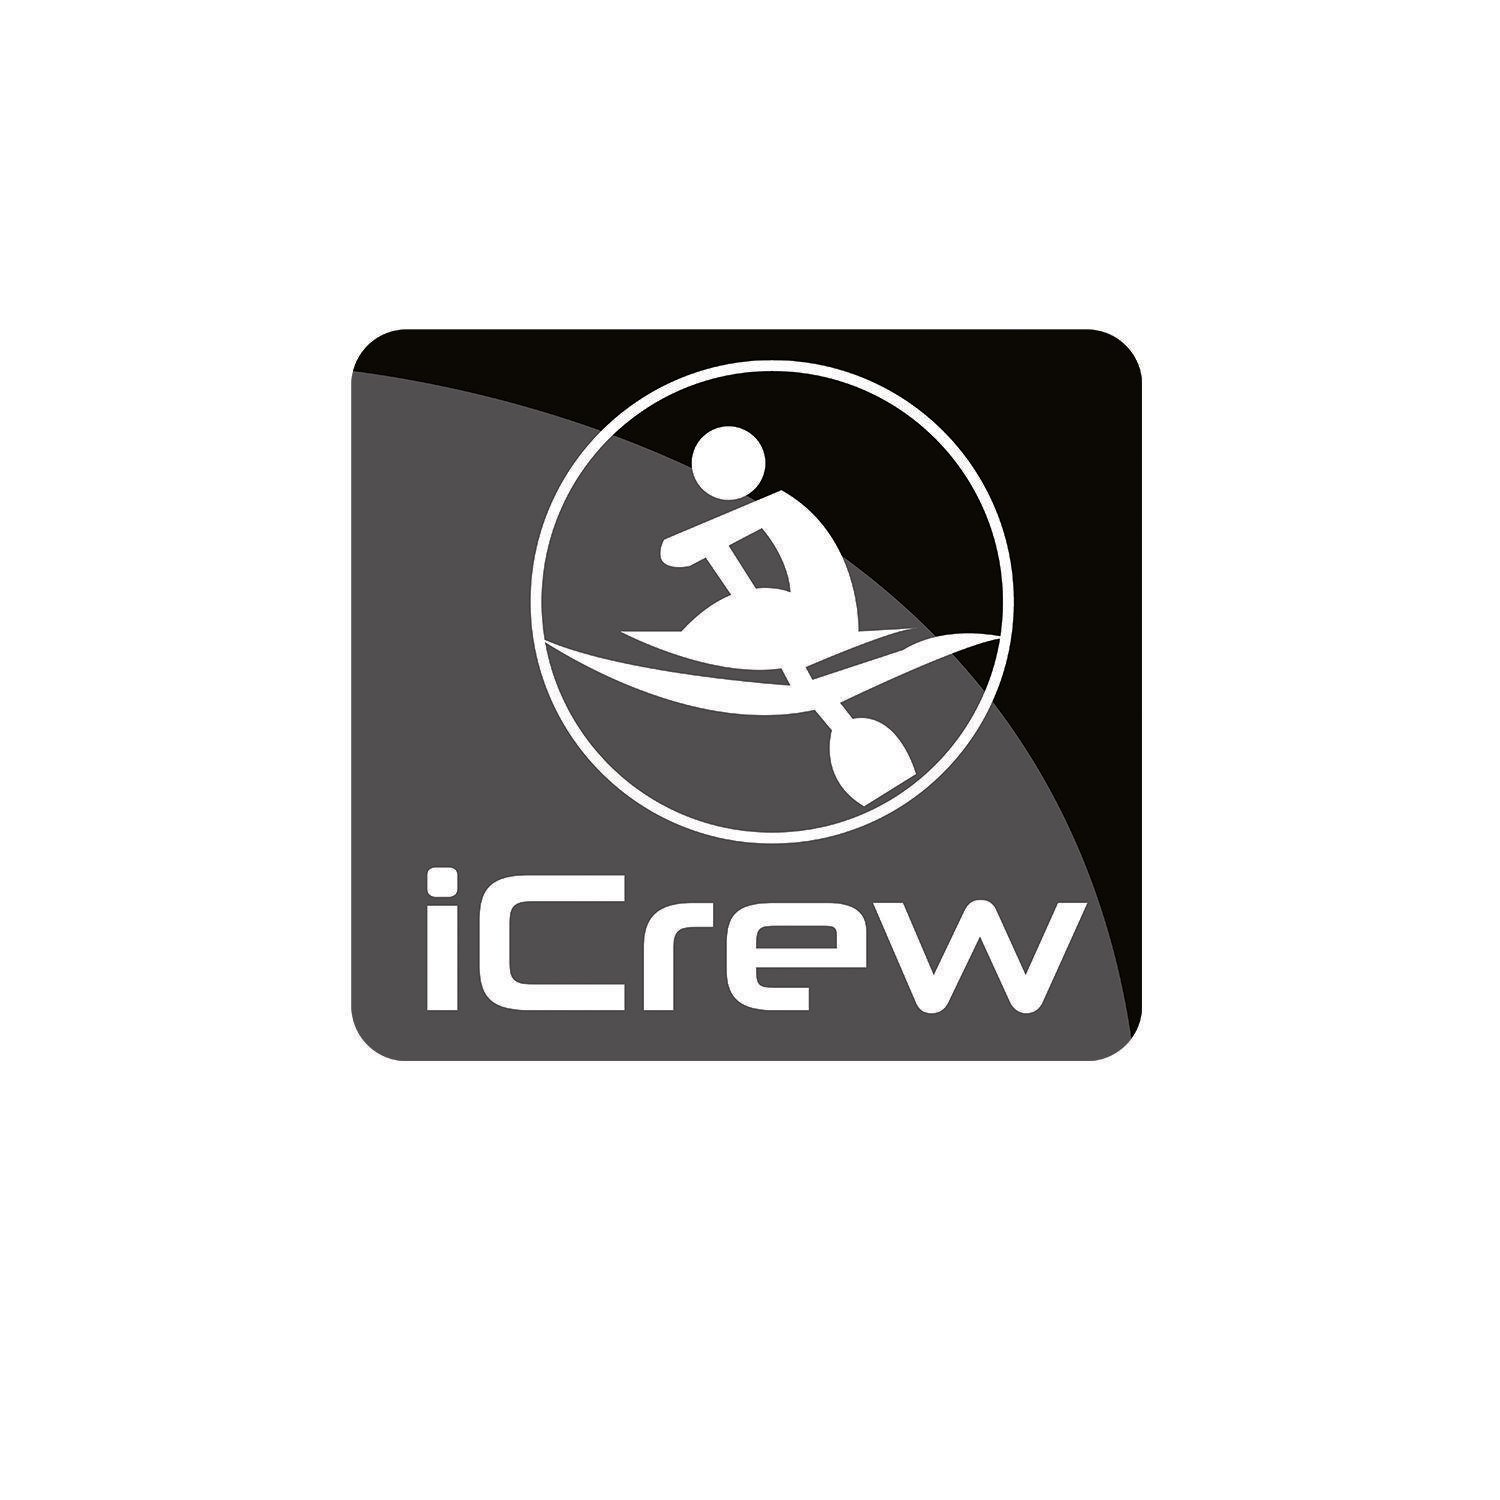 Ezy Logo - Modern, Professional, Store Logo Design for iCrew by Ezy logo ...